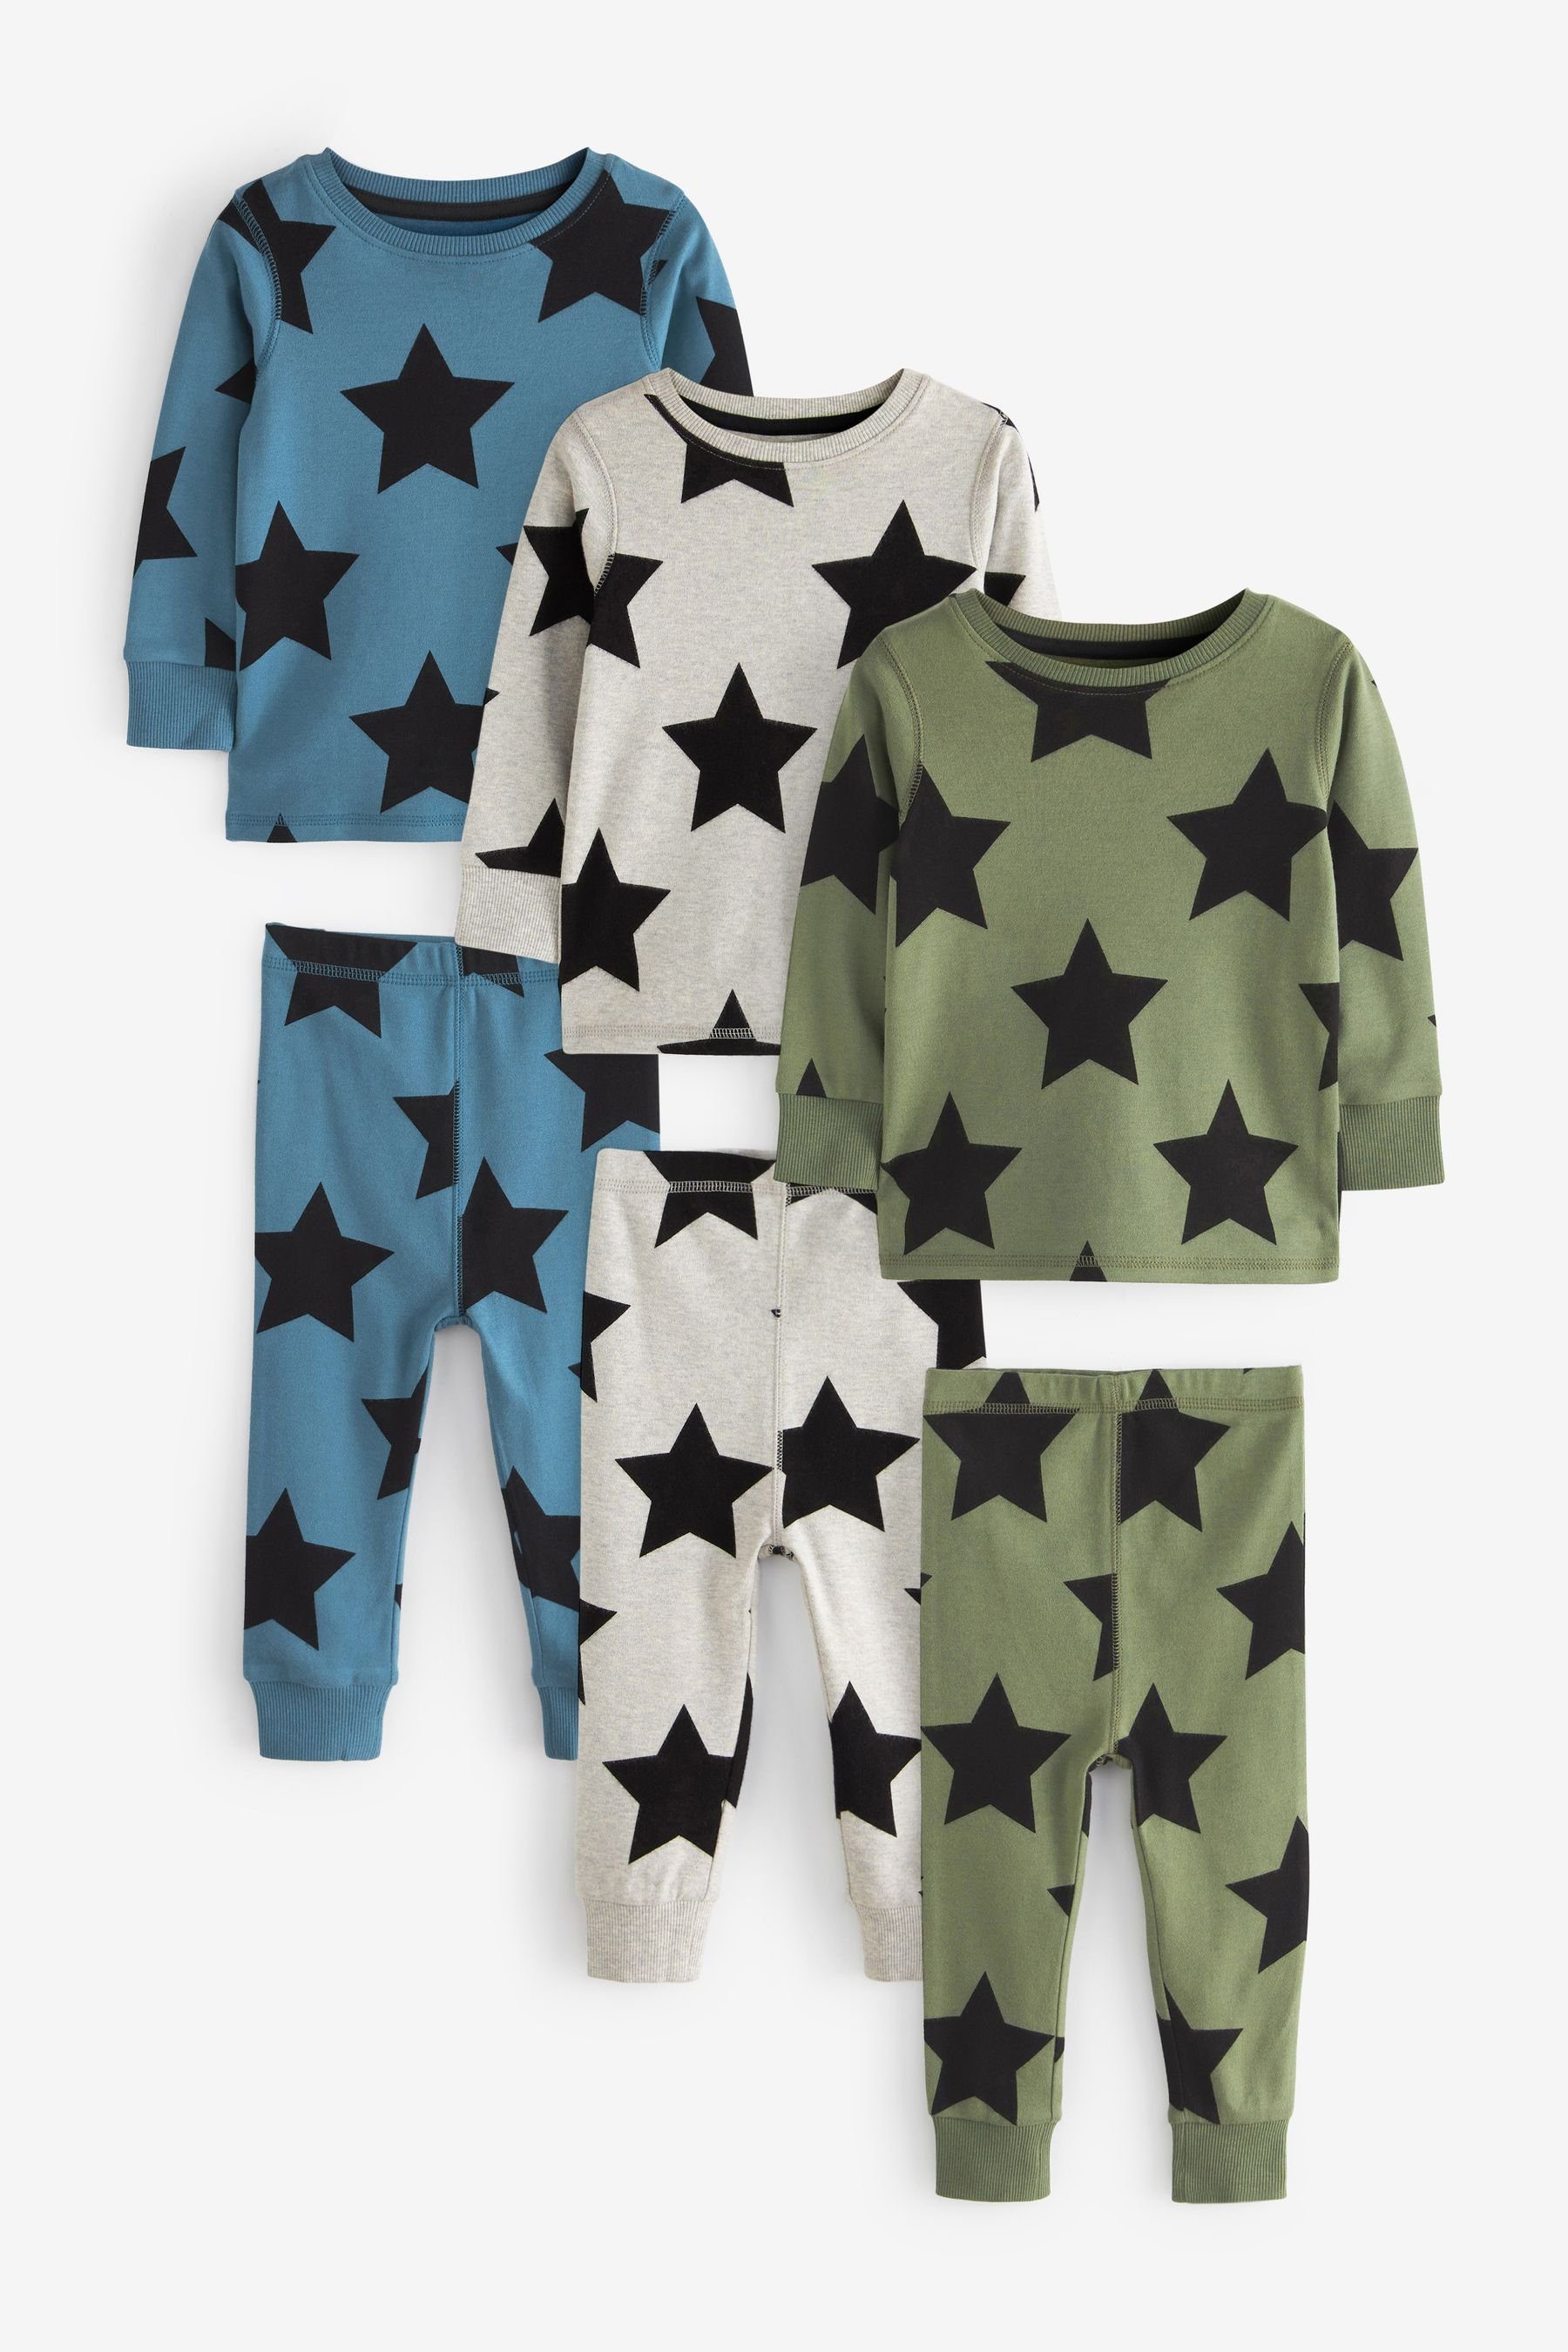 Next Pyjama Kuschelpyjamas, 3er-Pack (6 tlg) Khaki Green/Blue/White Star